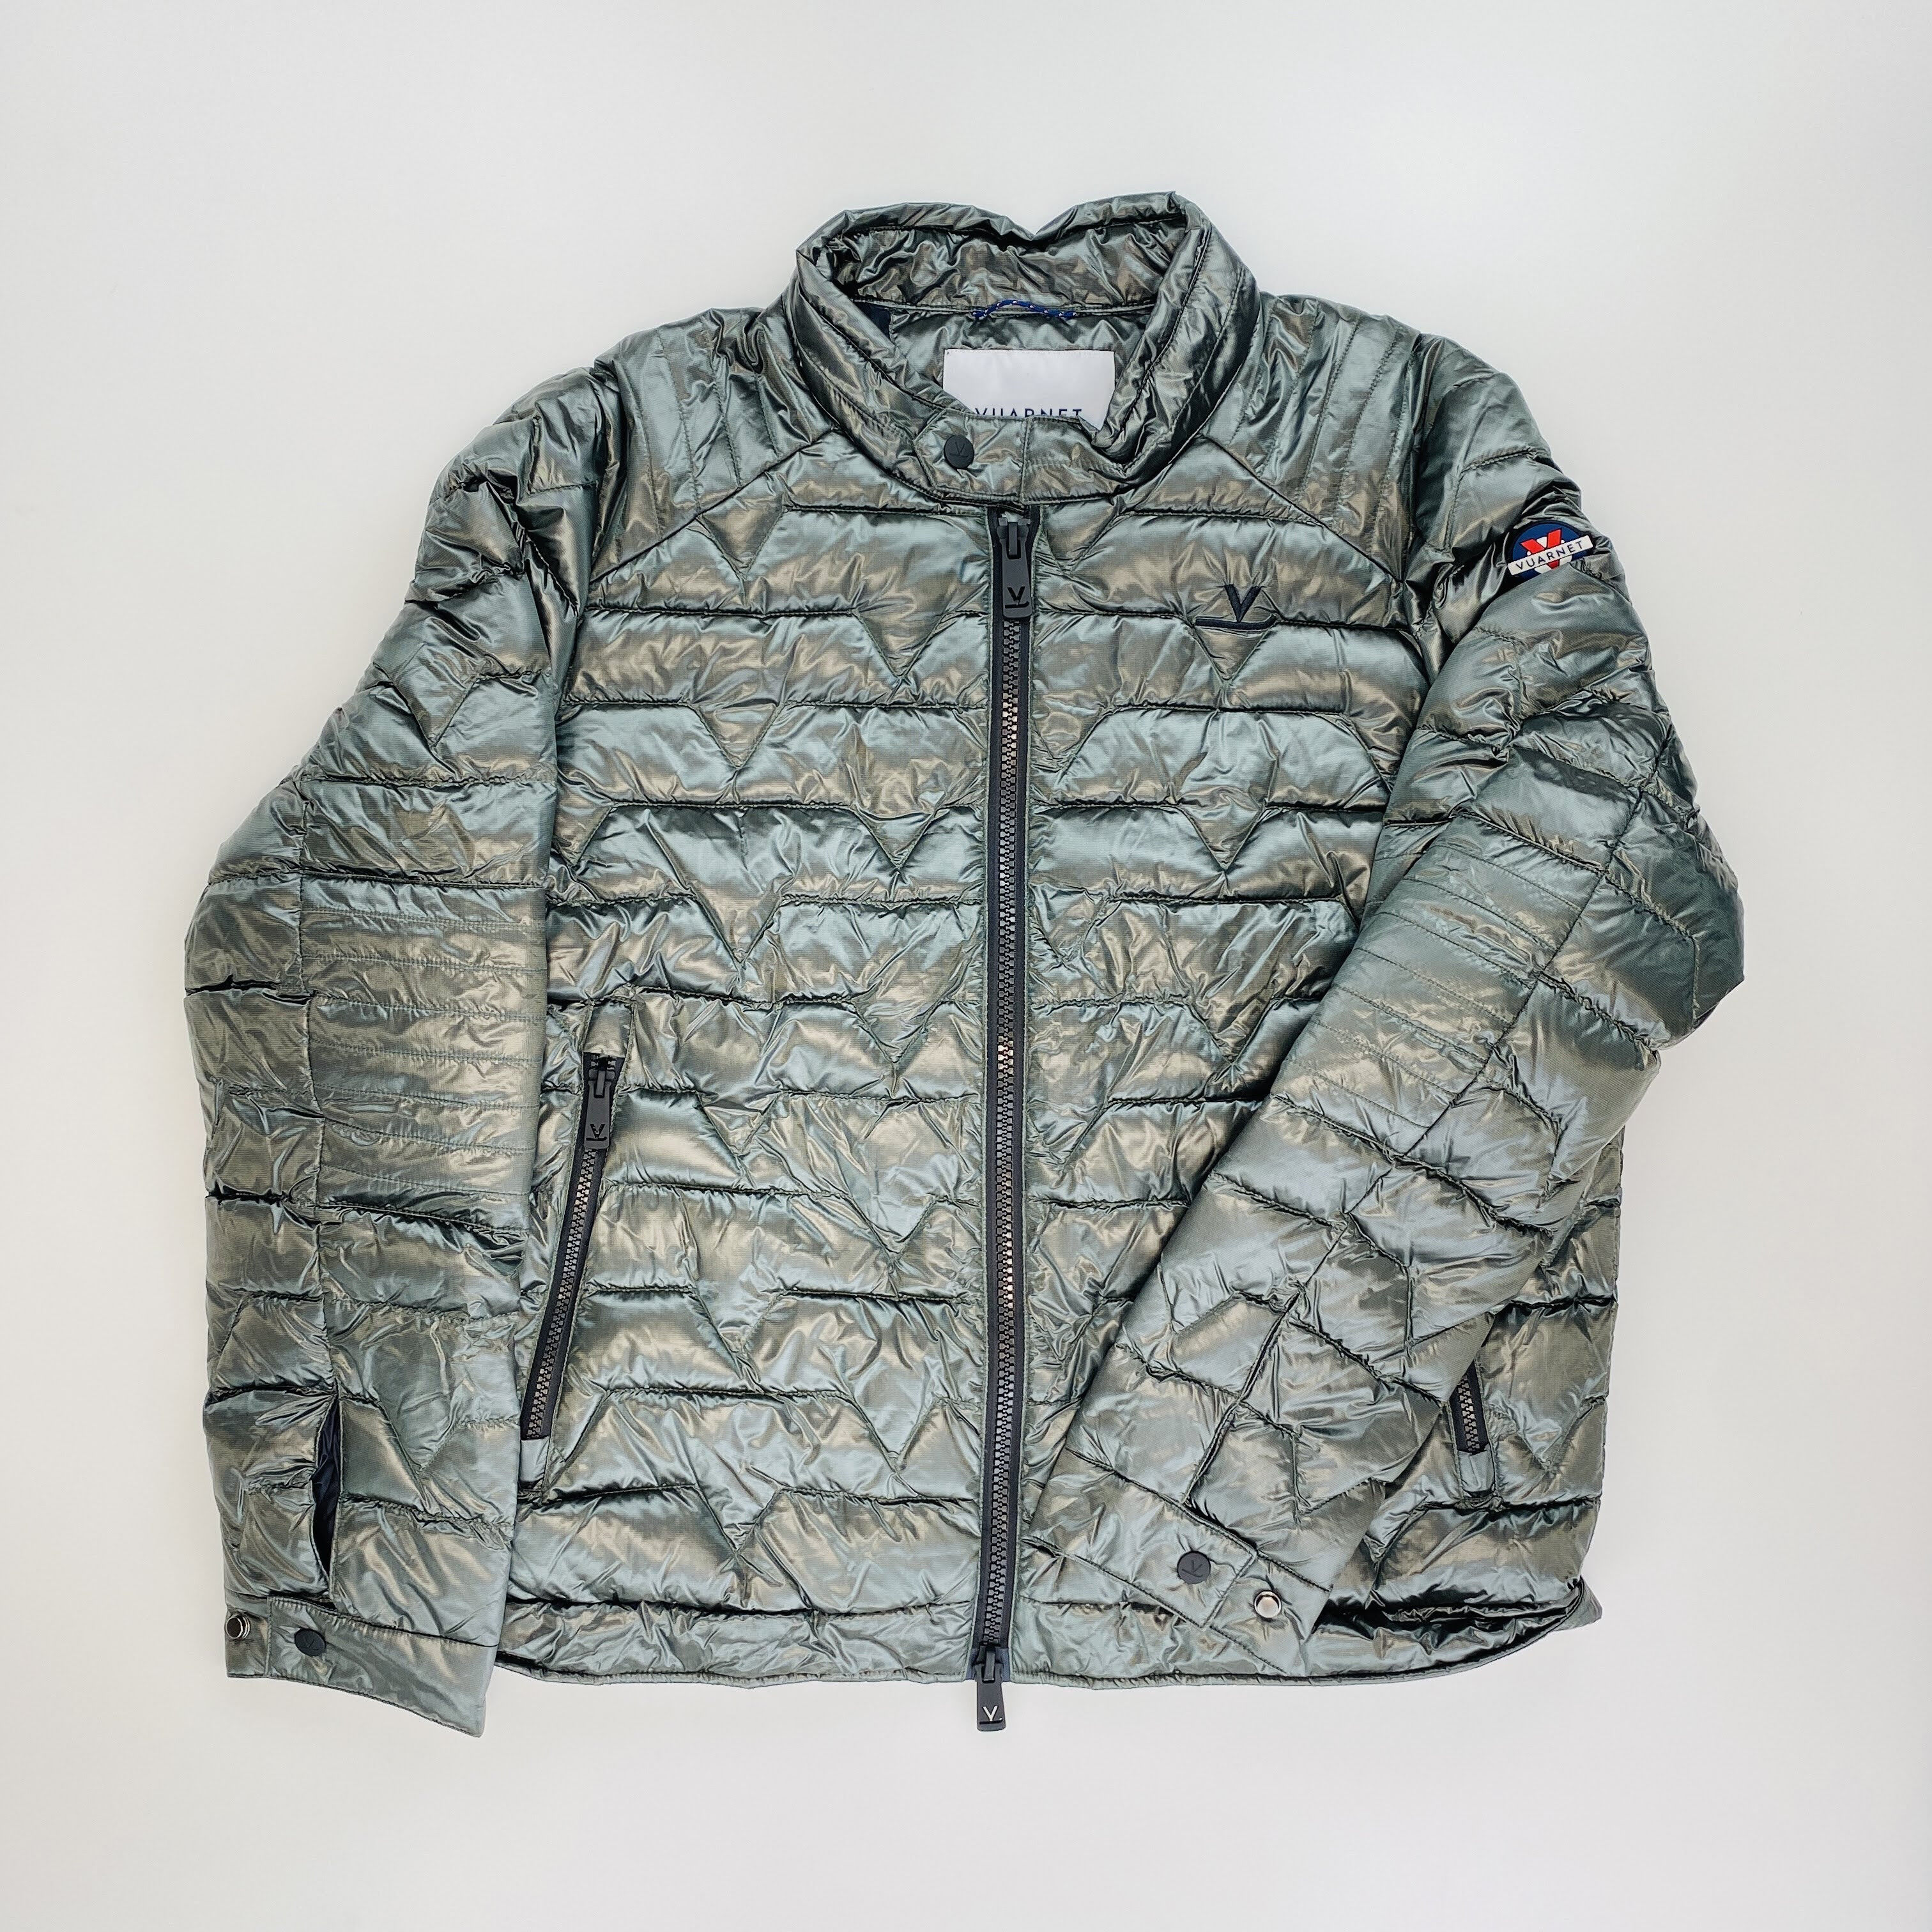 Vuarnet Garcia Jacket - Second Hand Synthetic jacket - Men's - Grey - L | Hardloop